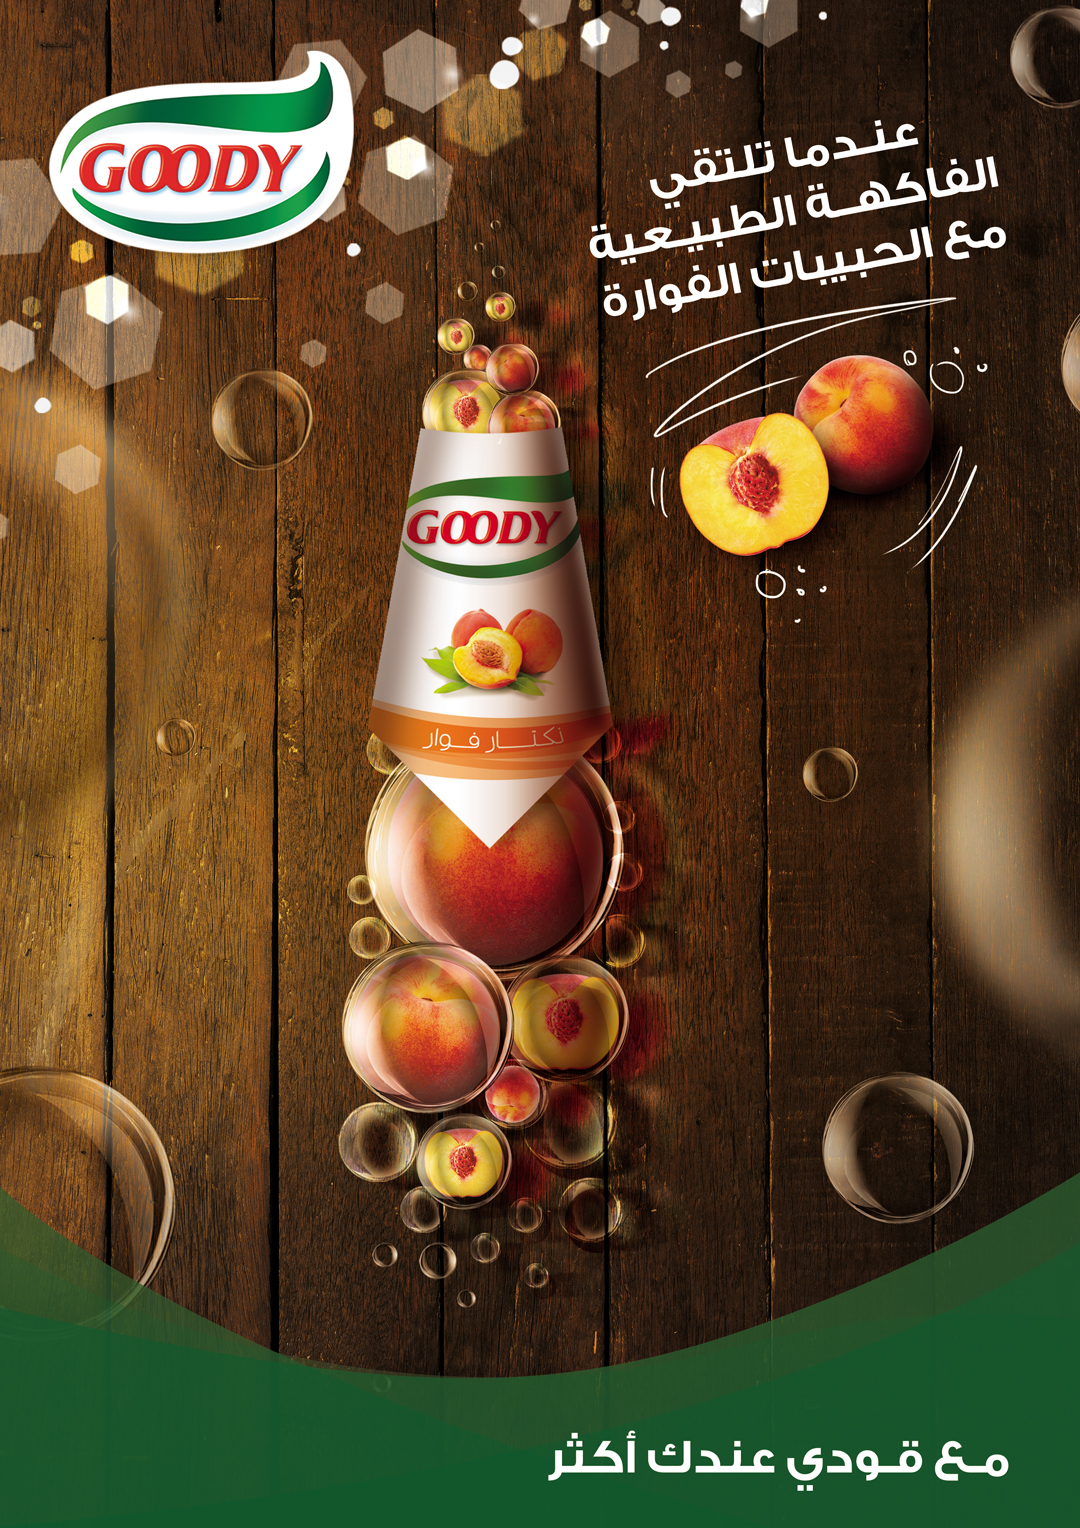 ads creative goody fruits apple nectar light Rrefreshing